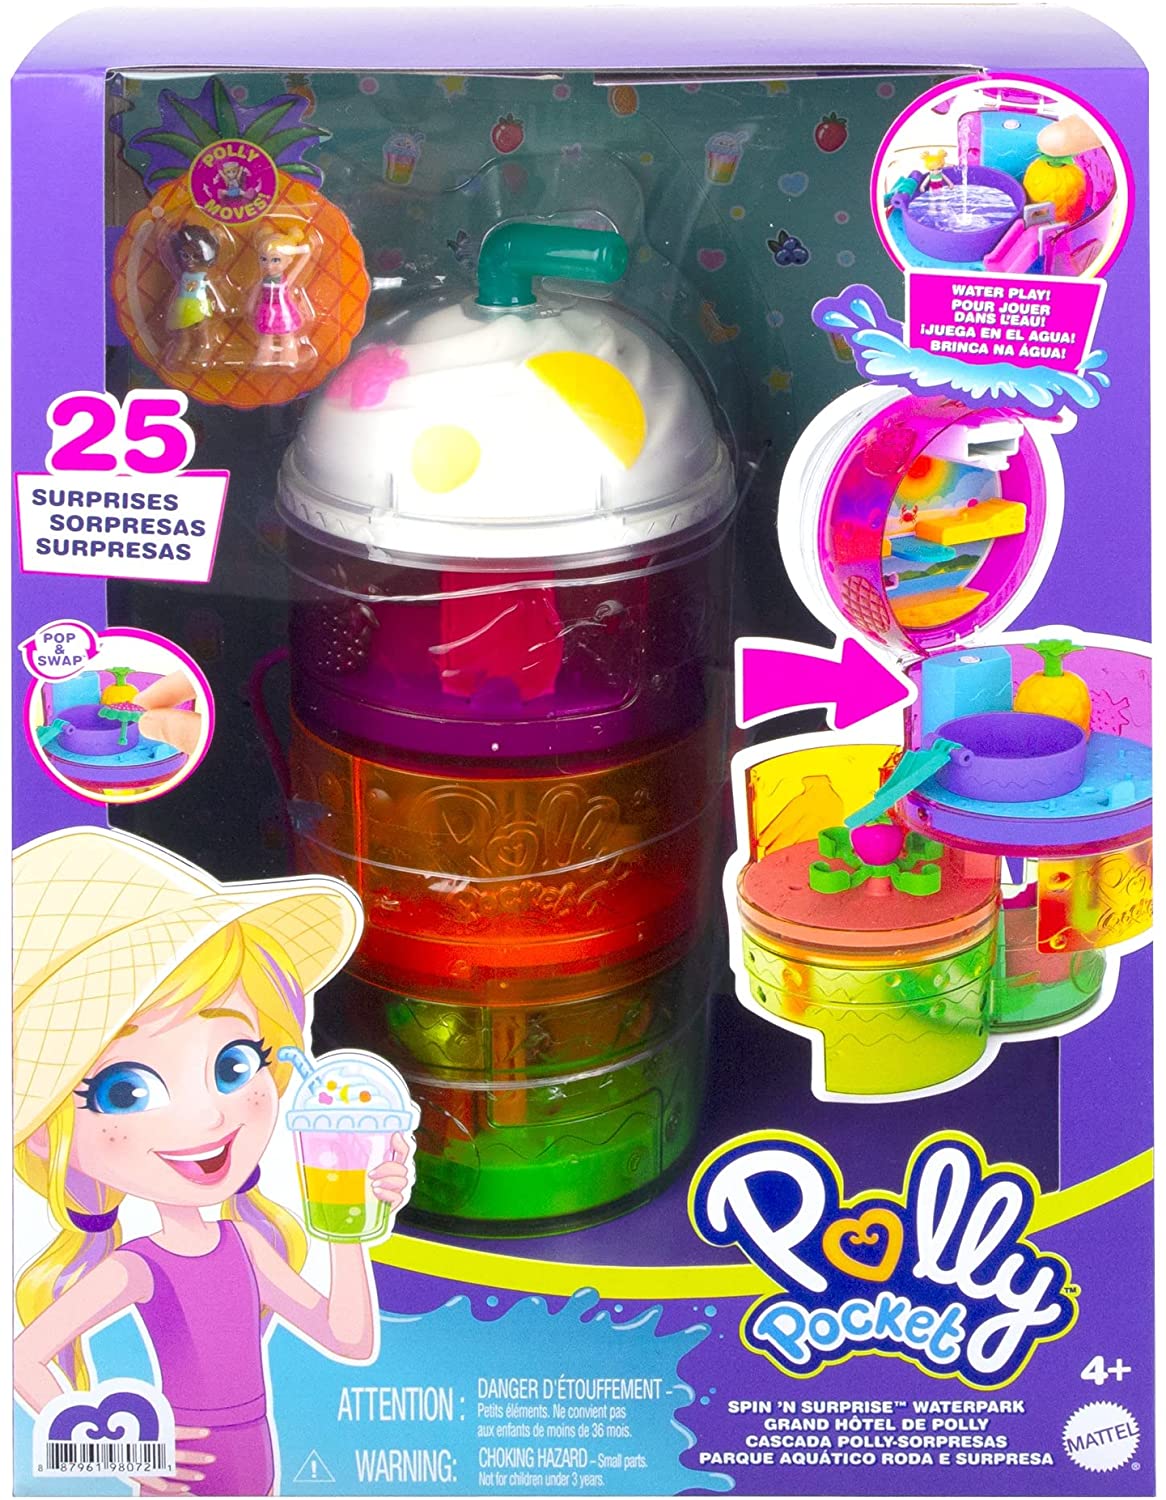 Polly Pocket Parque Aquatico De Frutas Mattel - Papellotti